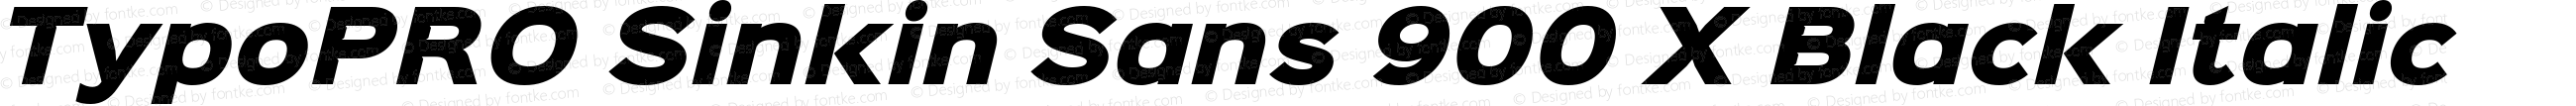 TypoPRO Sinkin Sans 900 X Black Italic